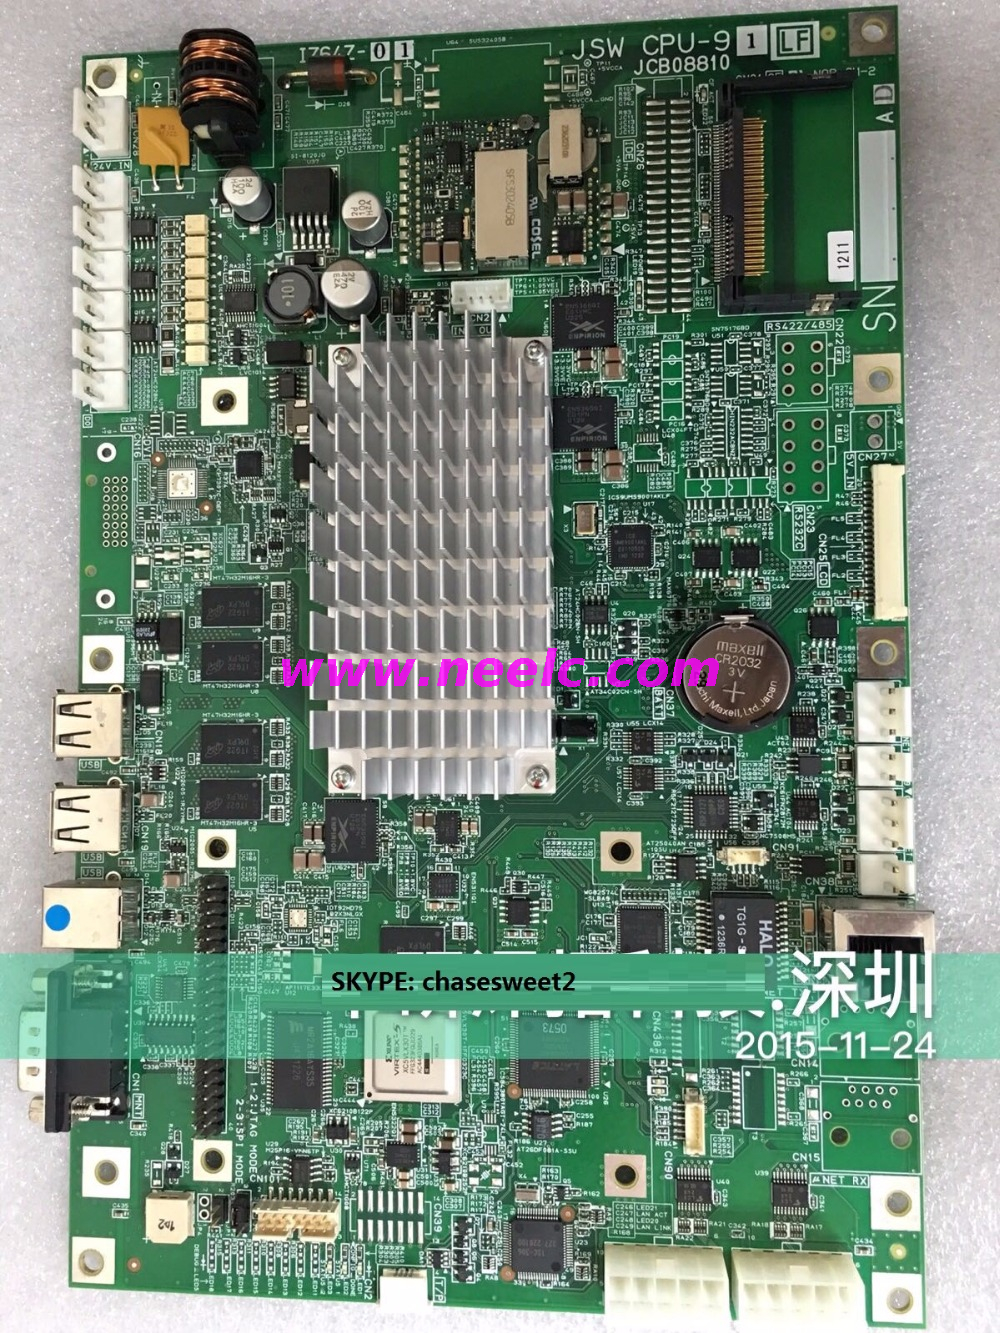 JCB08810 JSW CPU Board, Used in good condition